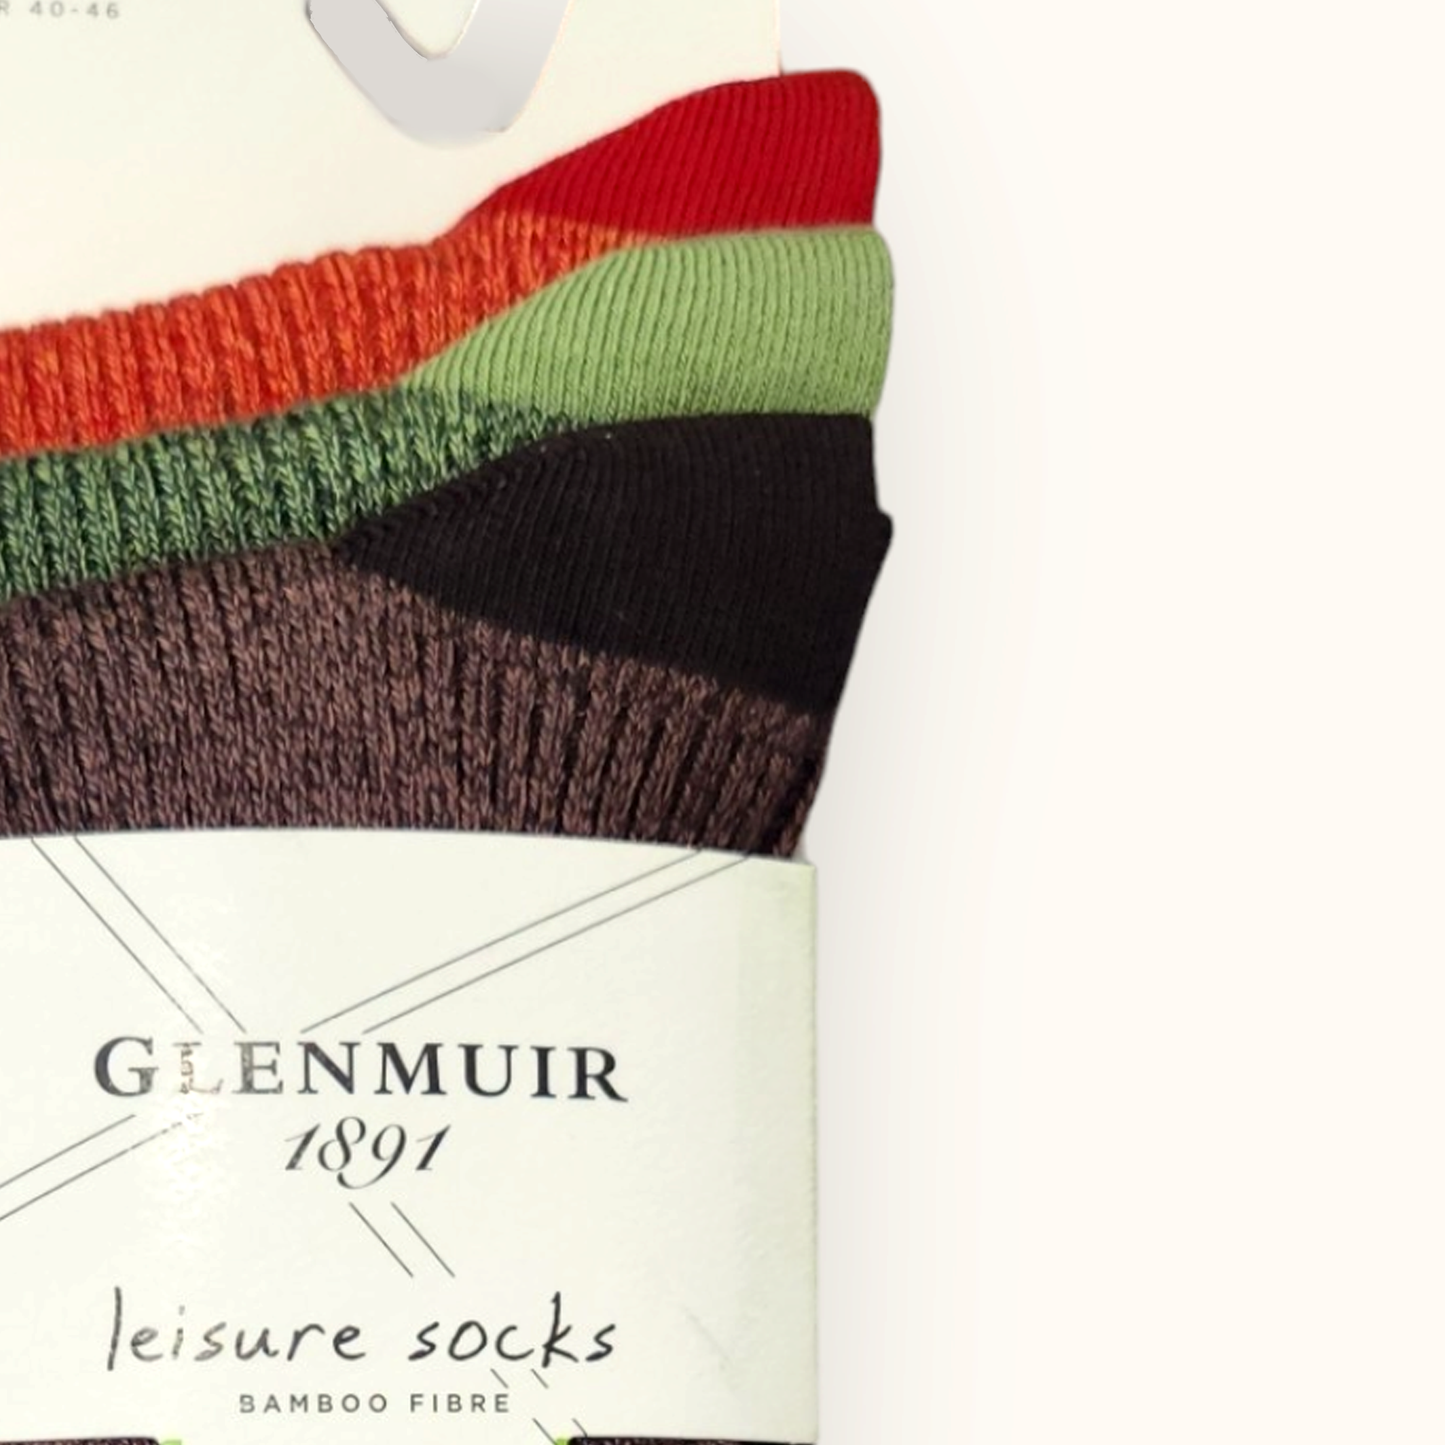 Glenmuir Soft Bamboo 3 Pack Socks - Brown/ Green/ Orange